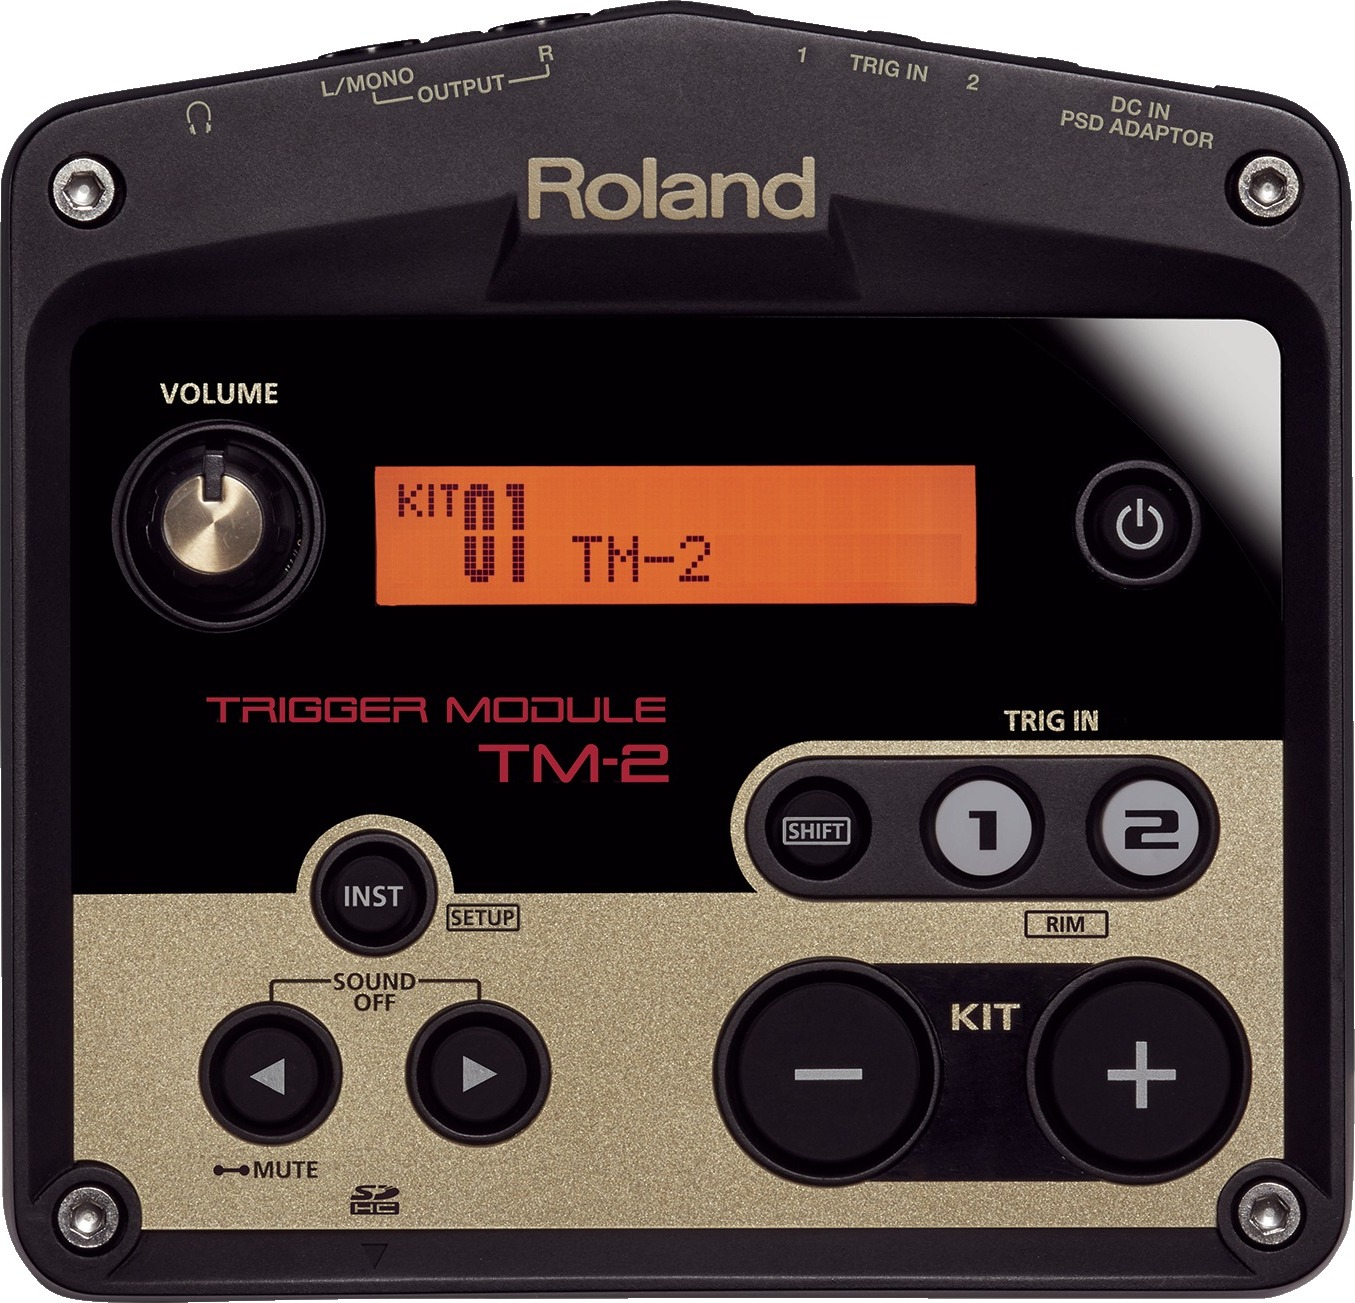 Roland Tm-2 Trigger Module - Electronic drum sound module - Main picture